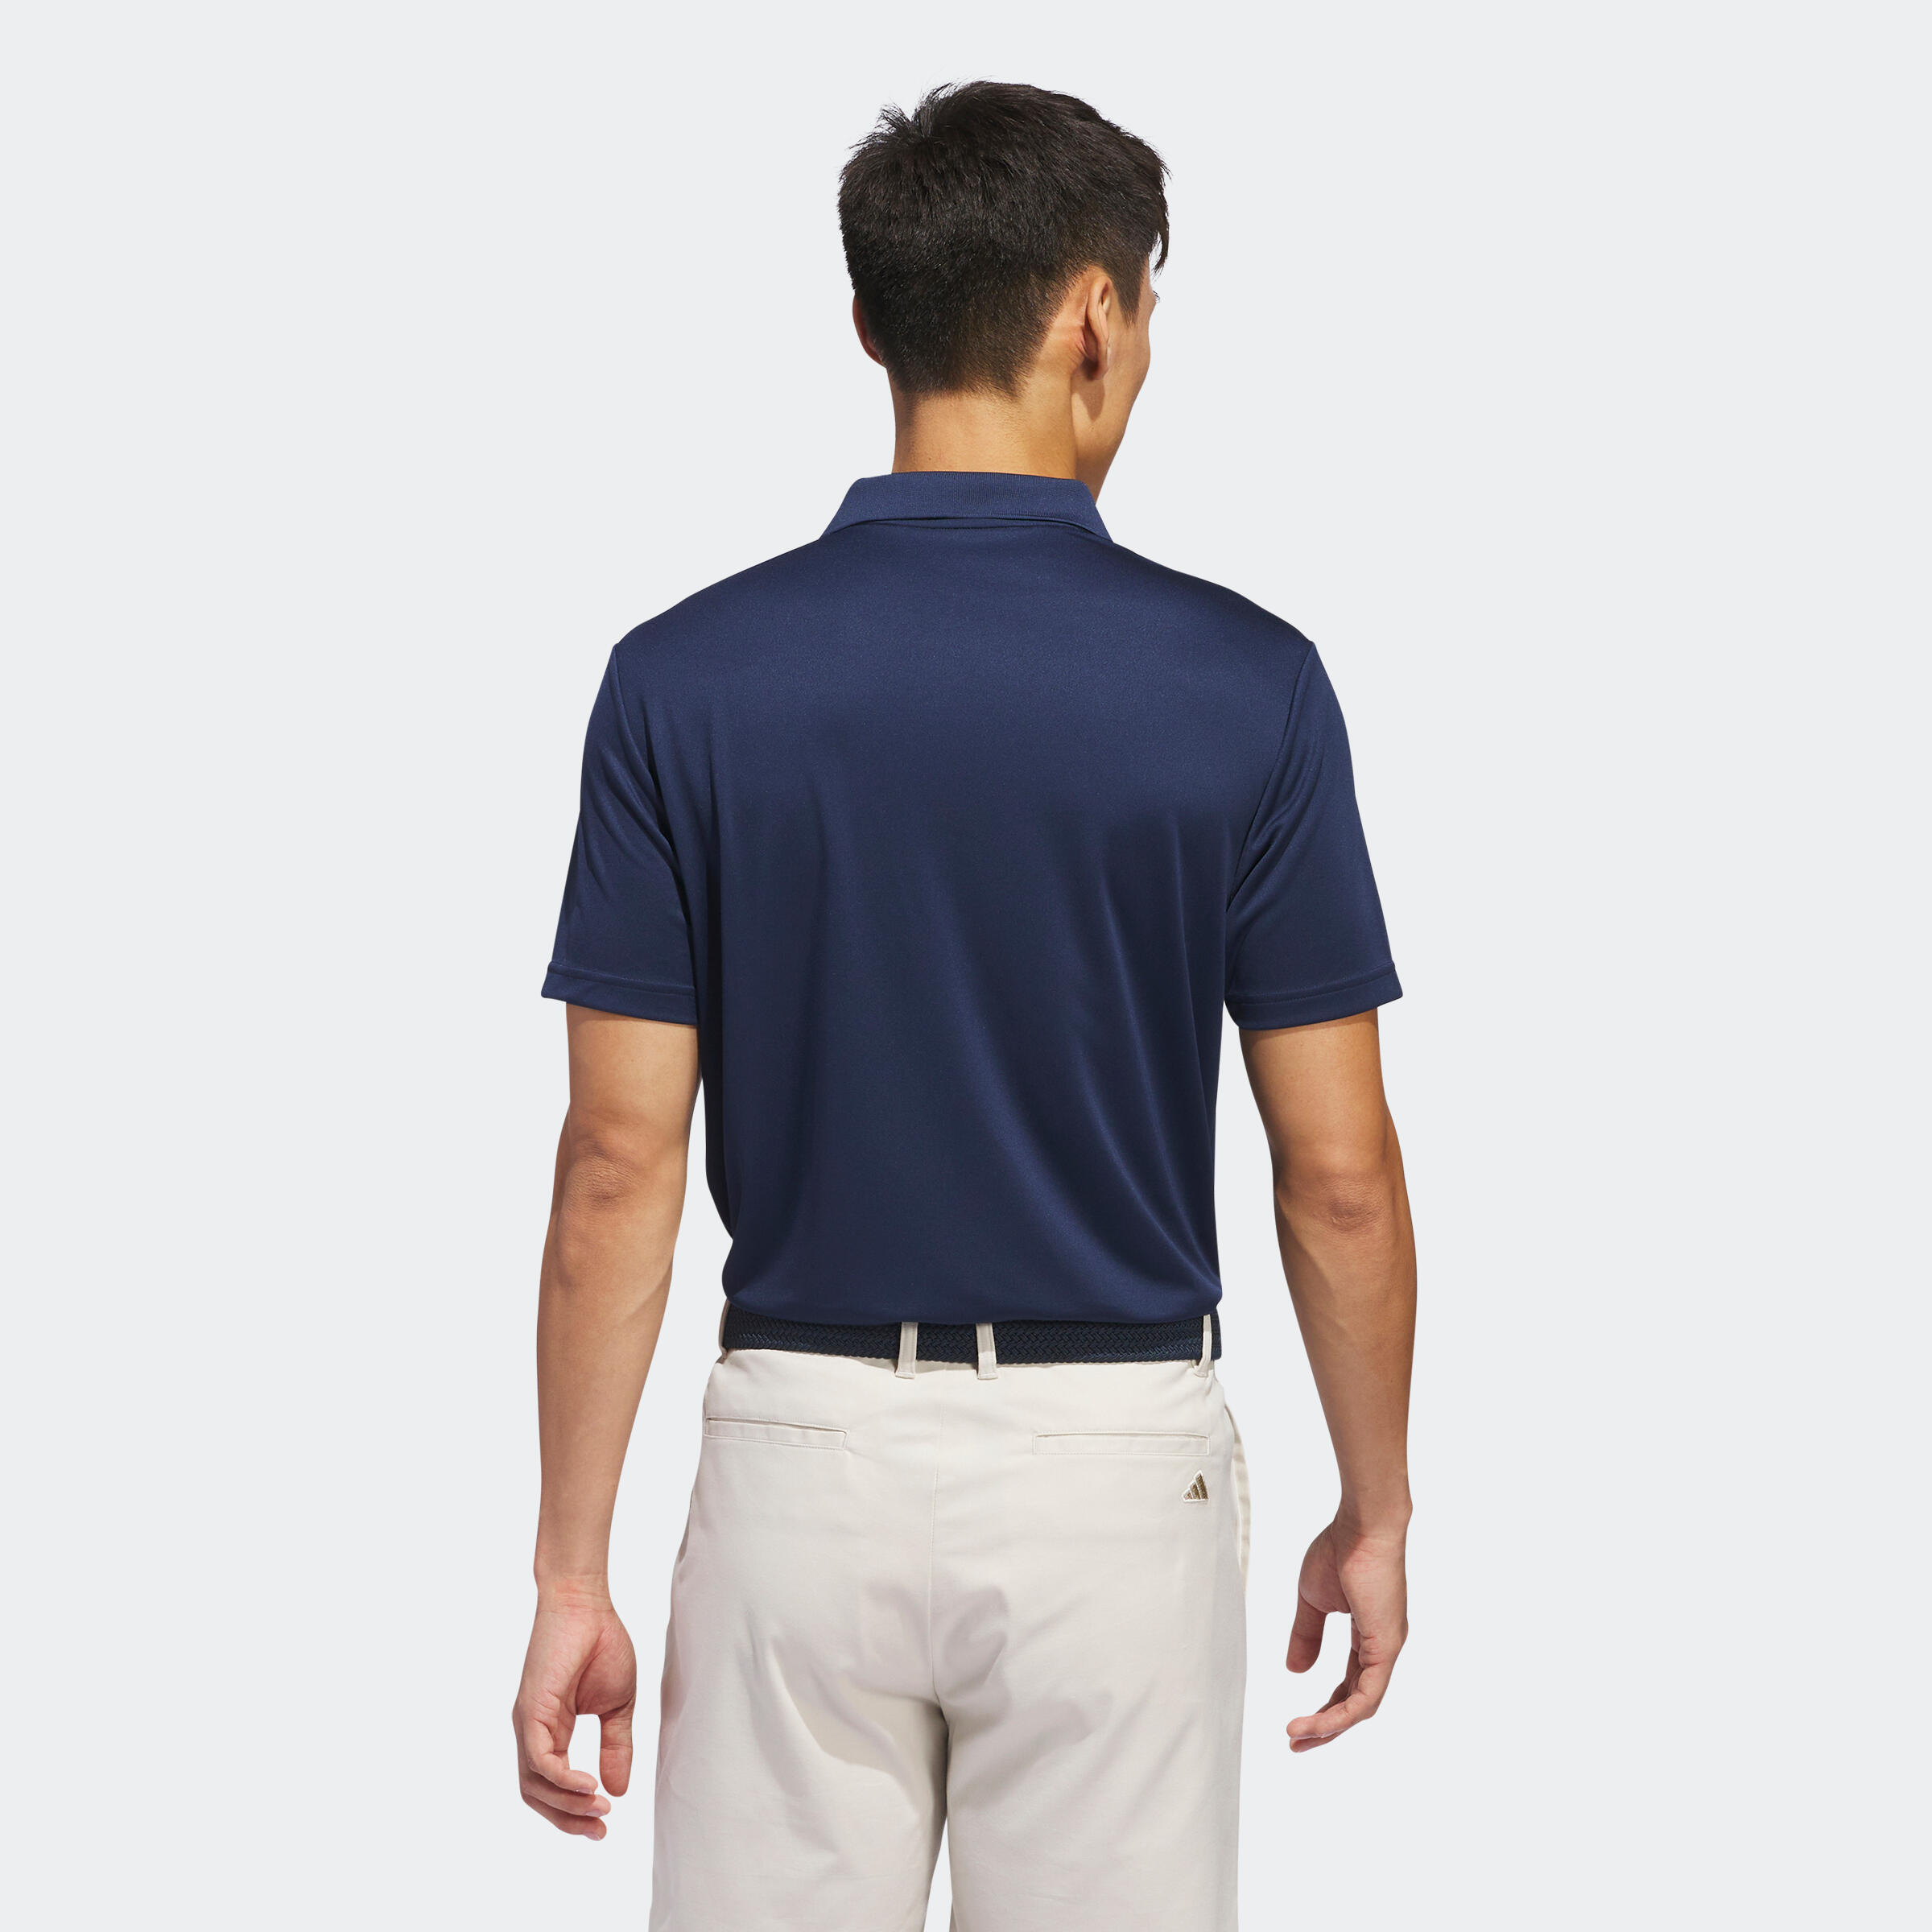 Men's golf short sleeve polo shirt - Adidas navy blue 2/4